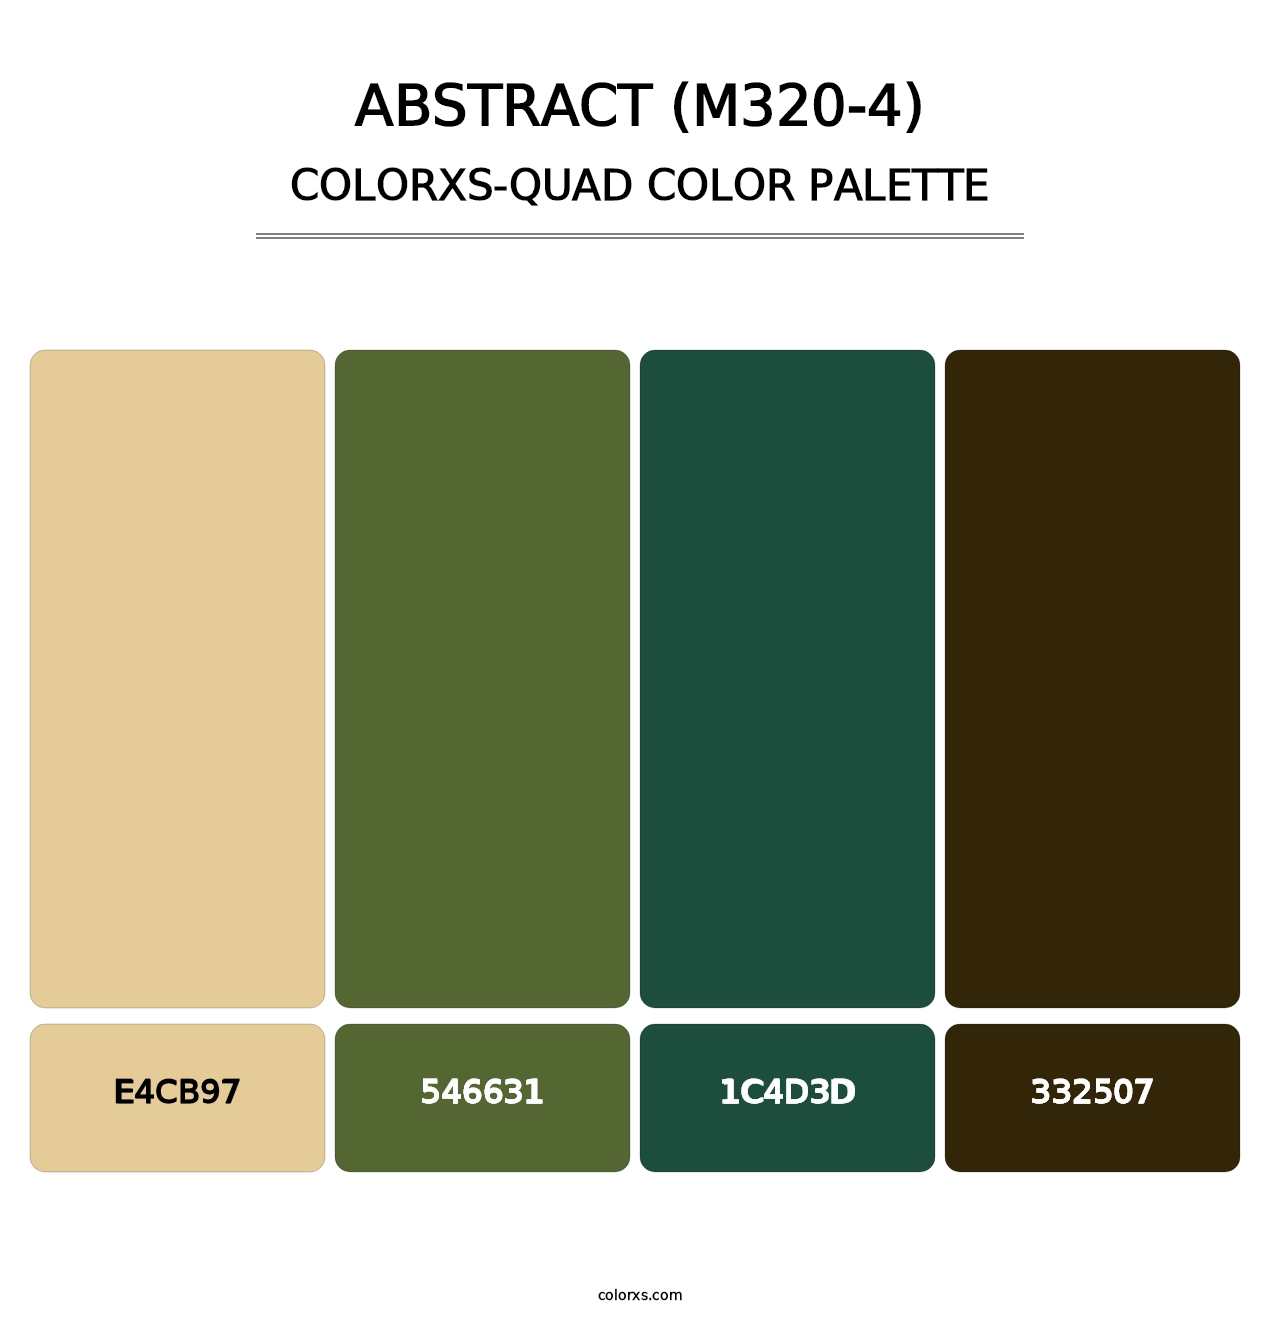 Abstract (M320-4) - Colorxs Quad Palette